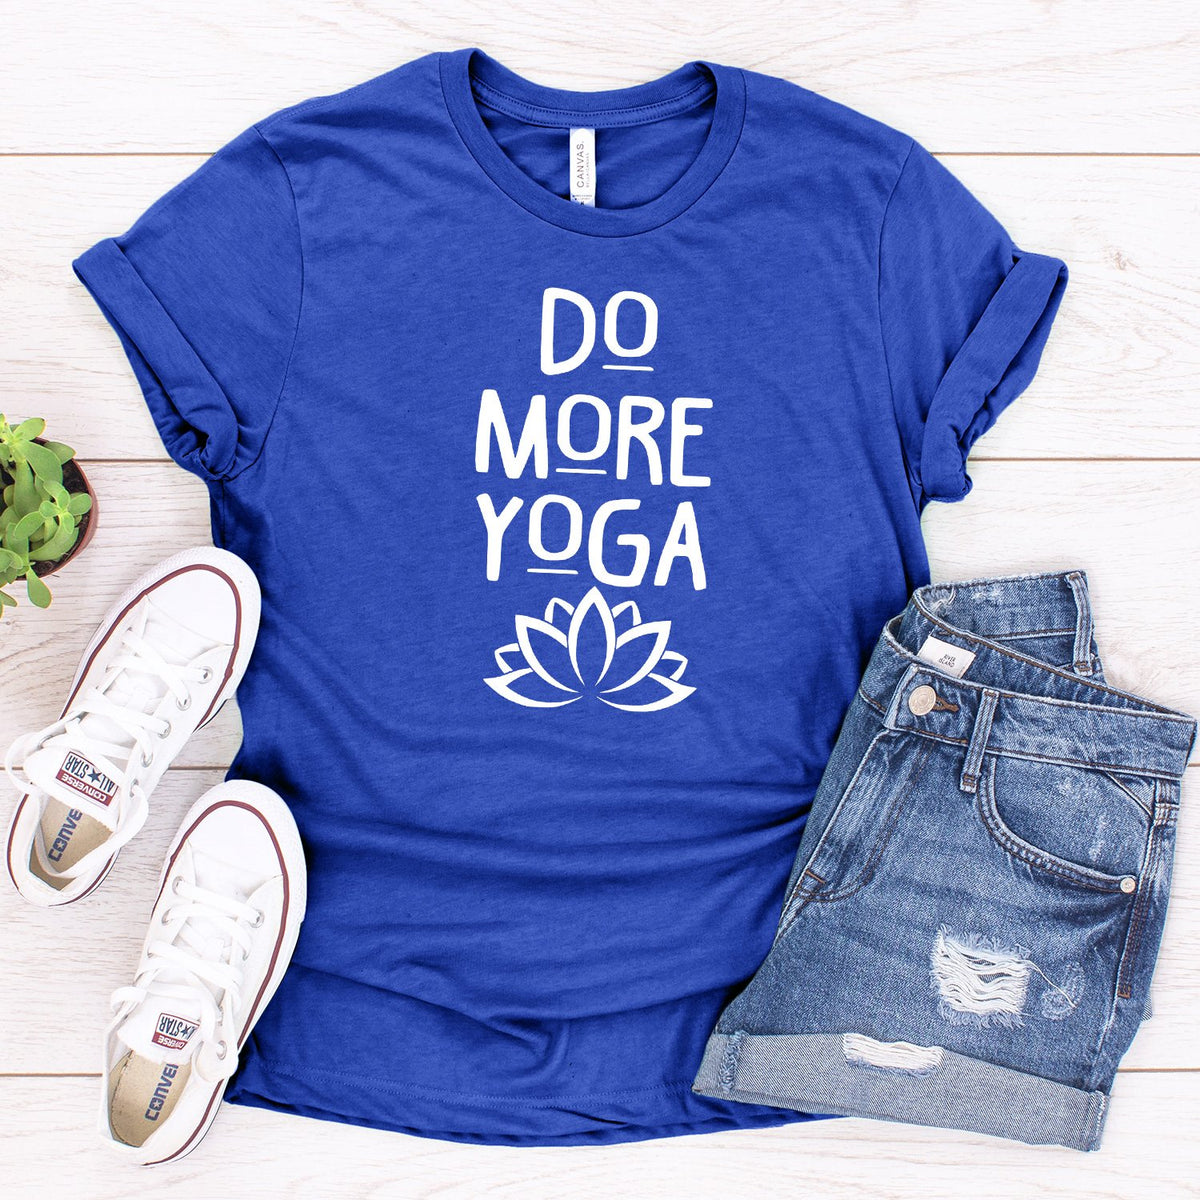 Do More Yoga - Short Sleeve Tee Shirt